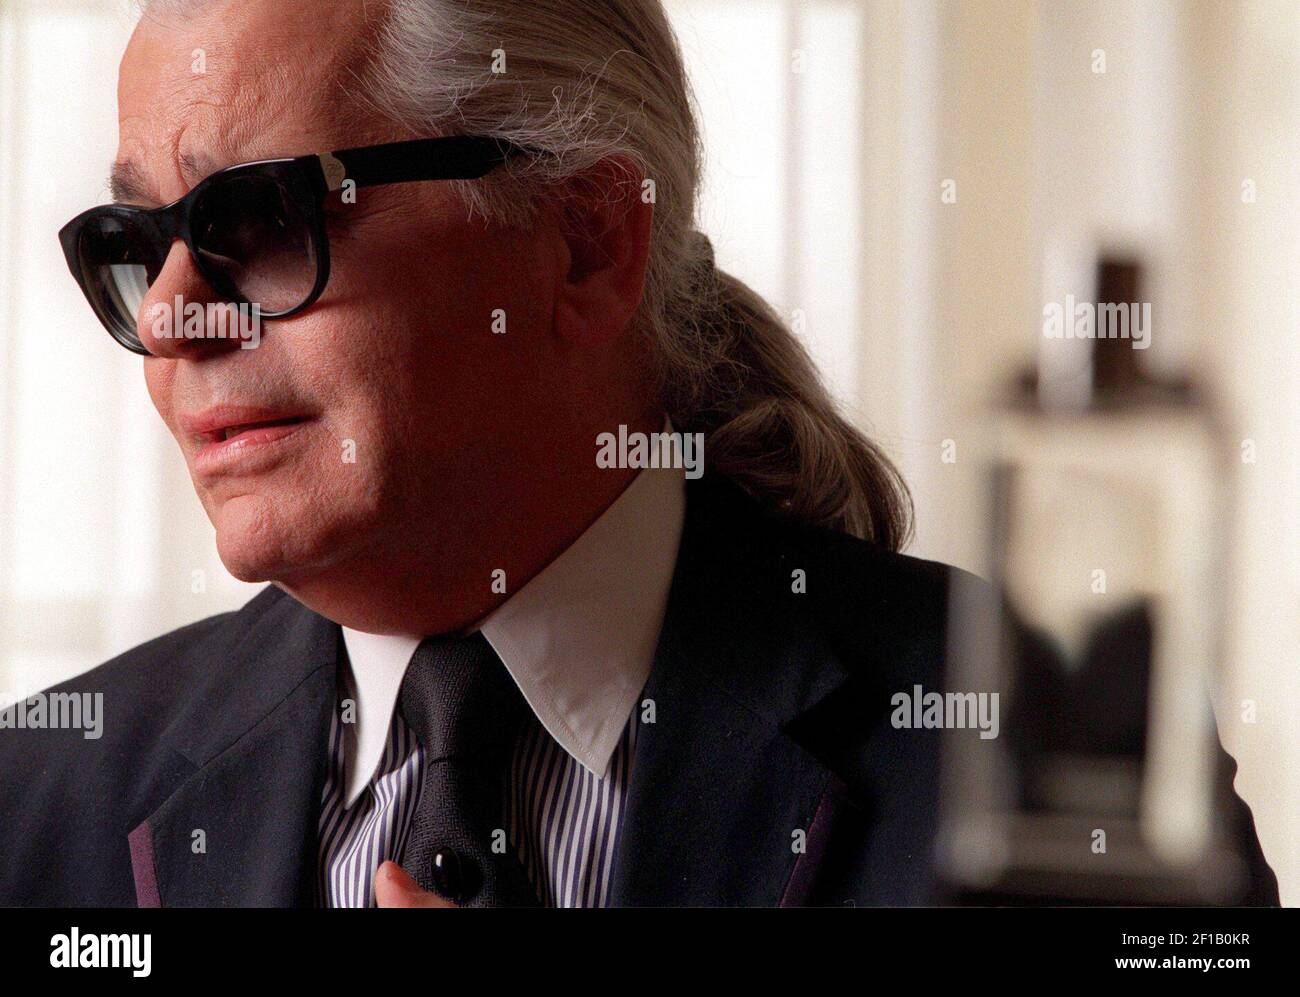 Karl Lagerfeld: The Man, the Myth, the Sunglasses